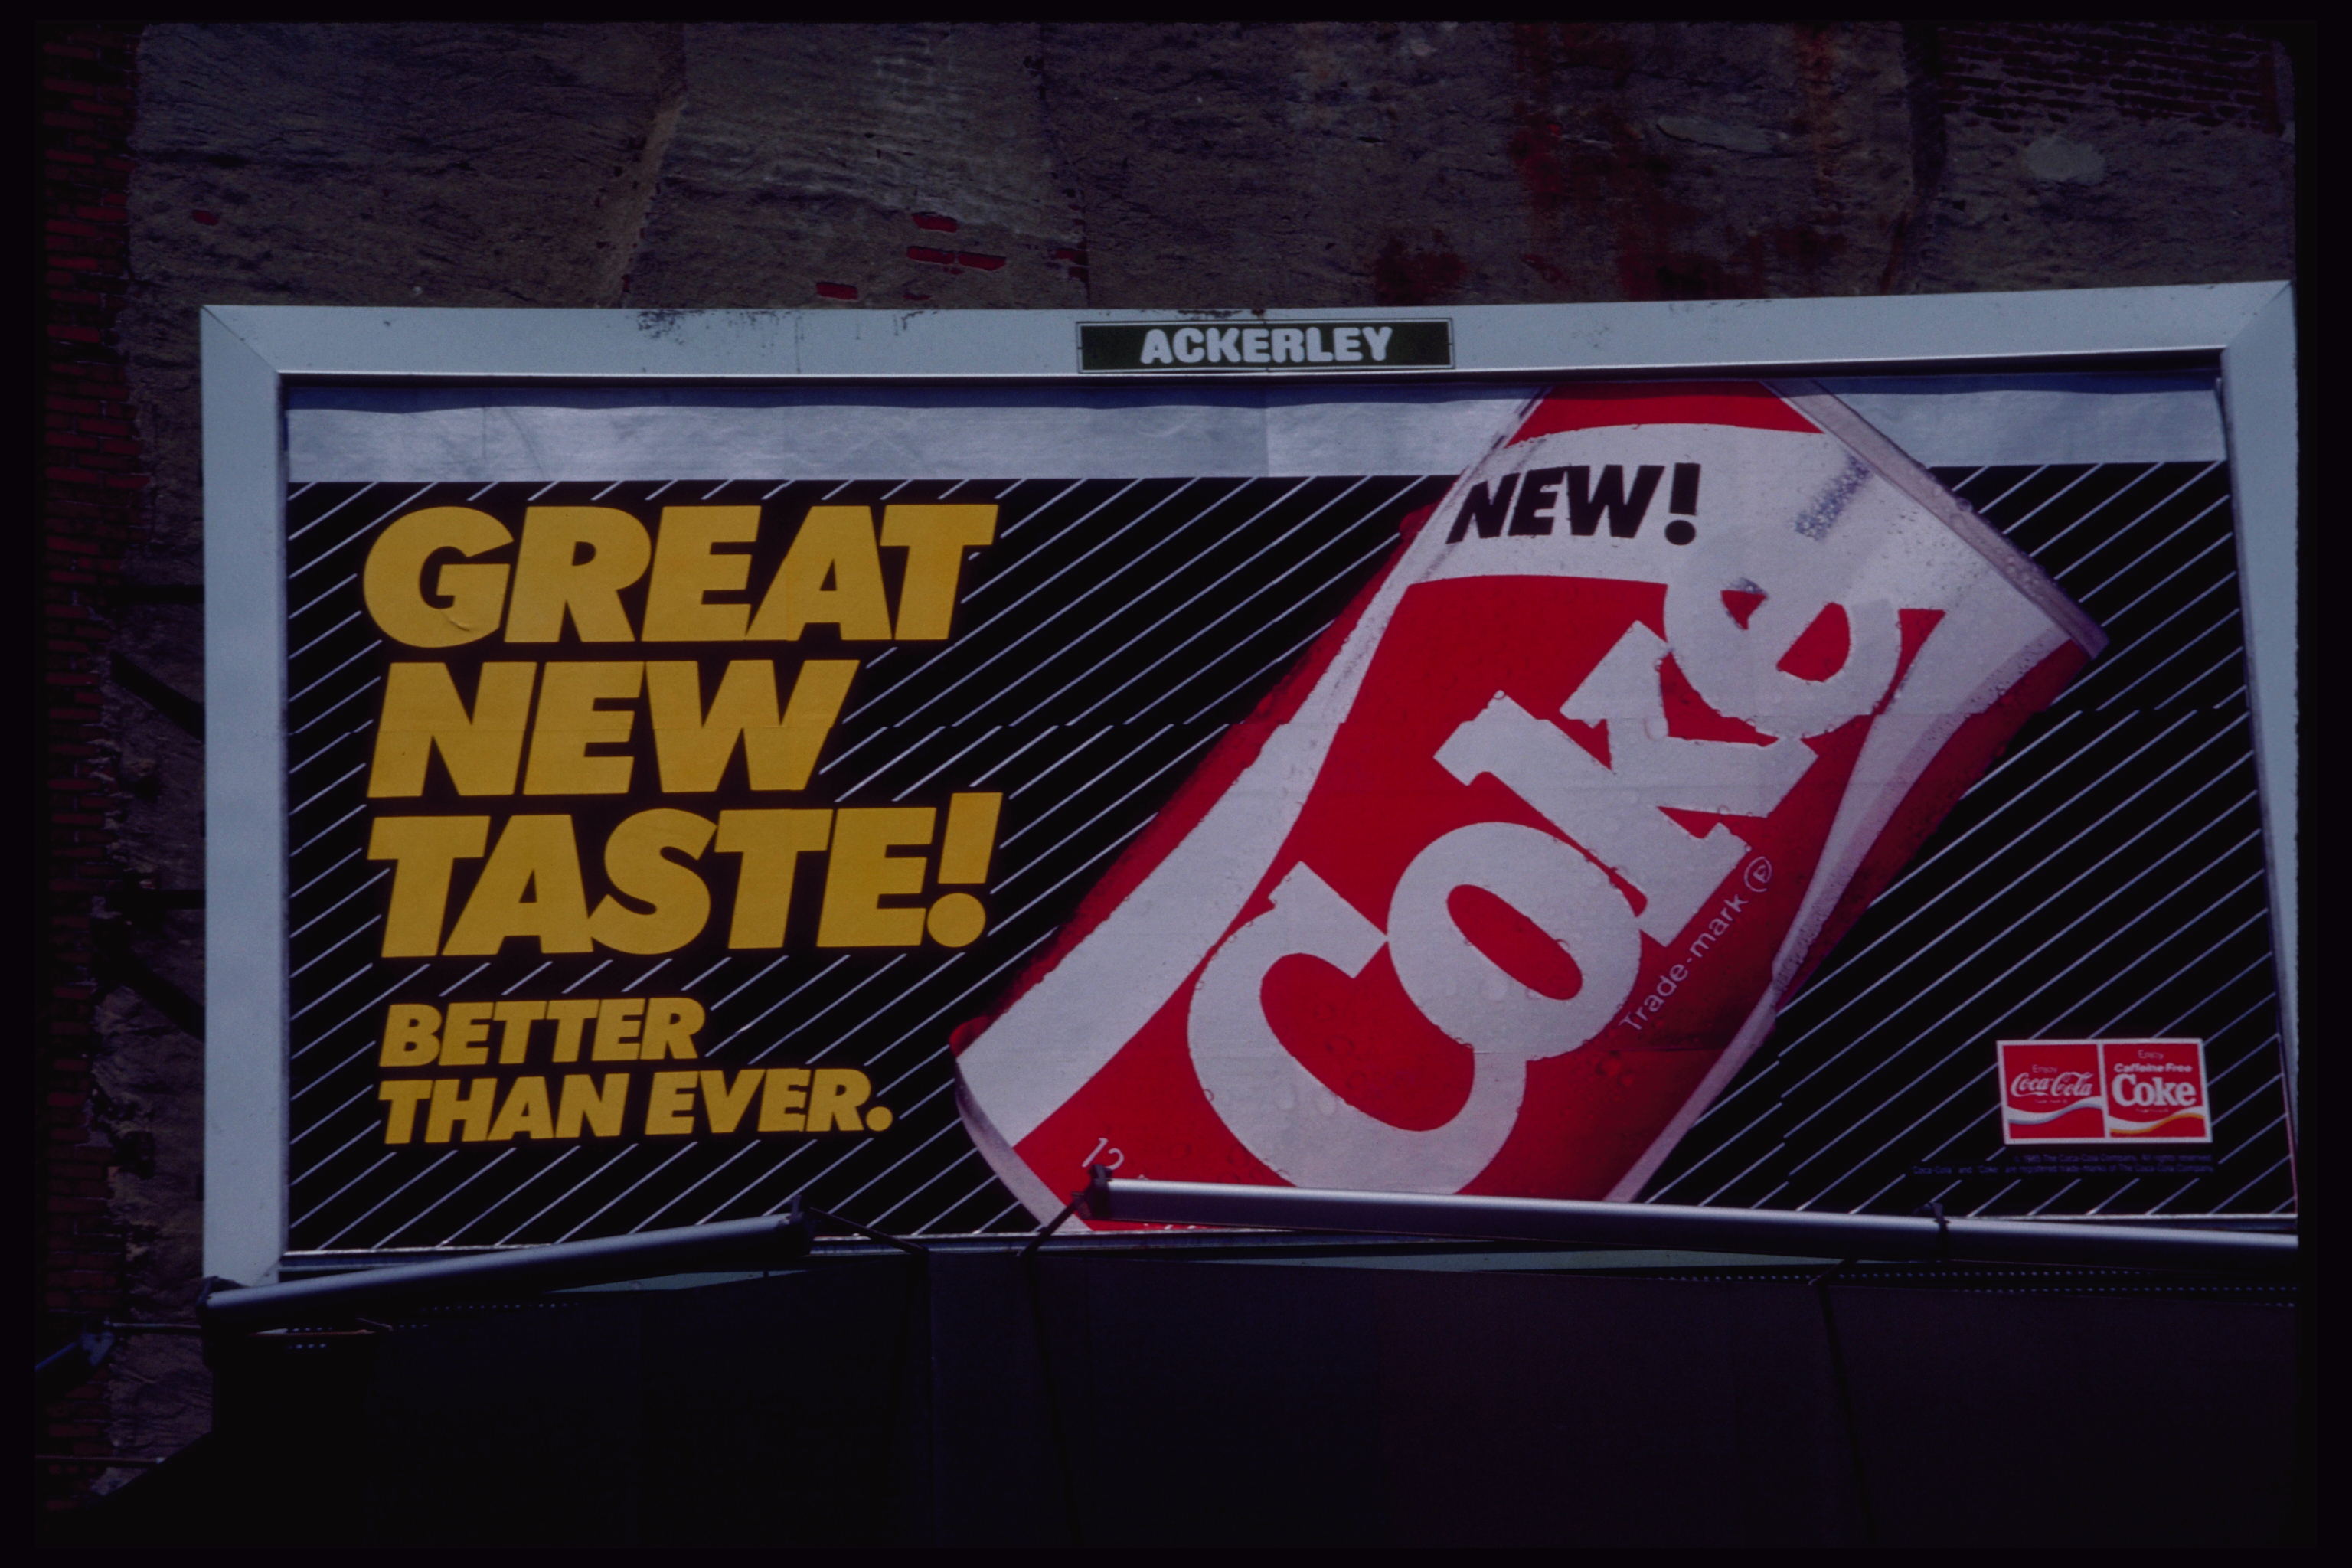 Billboard for the New Coke